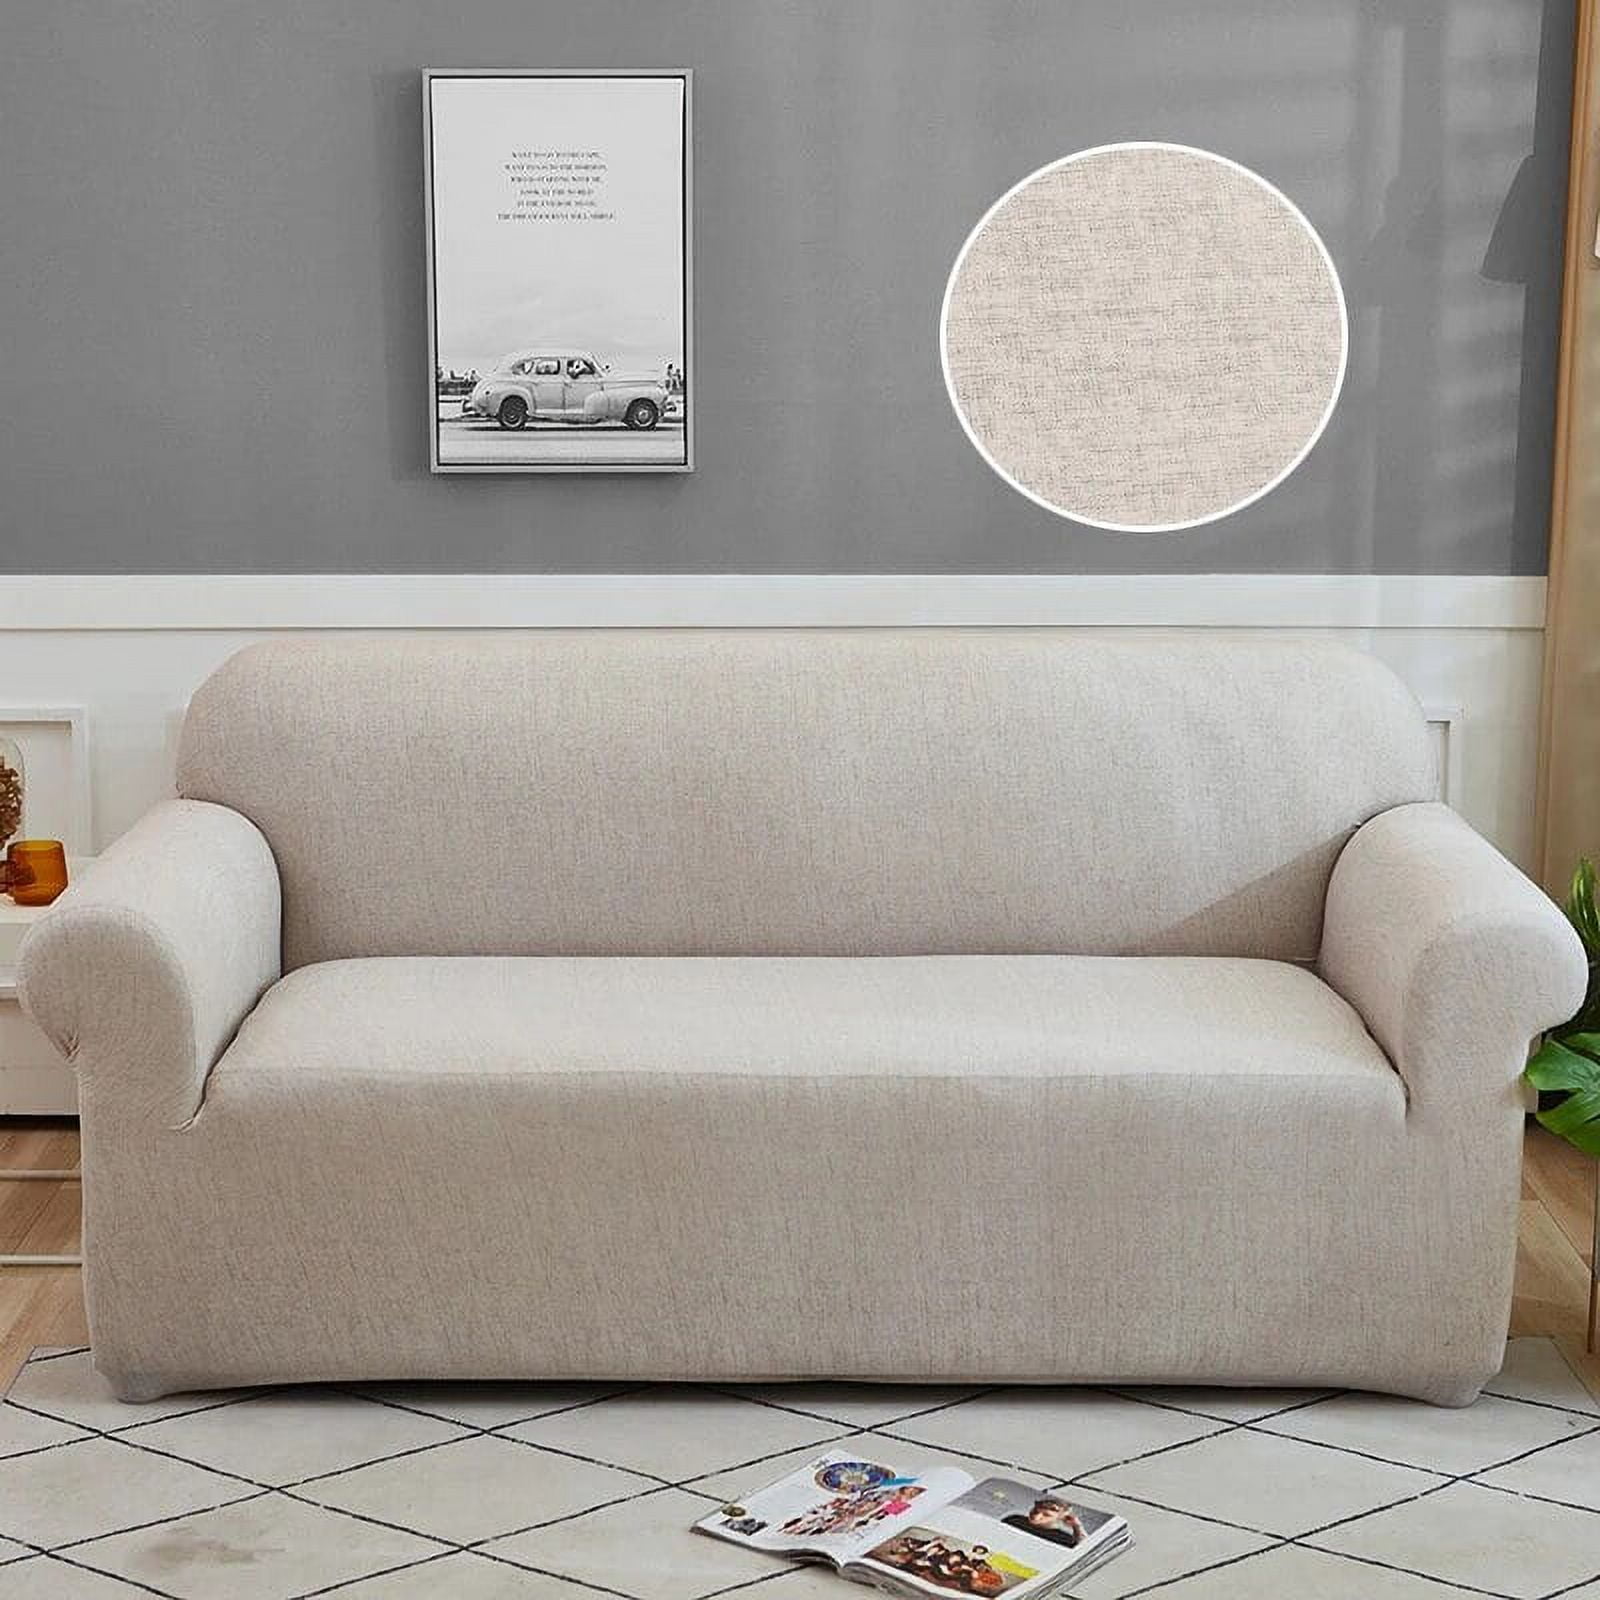 Geometry Plaid Sofa Cover Slipcovers Stretch Sofa Covers for Living ...